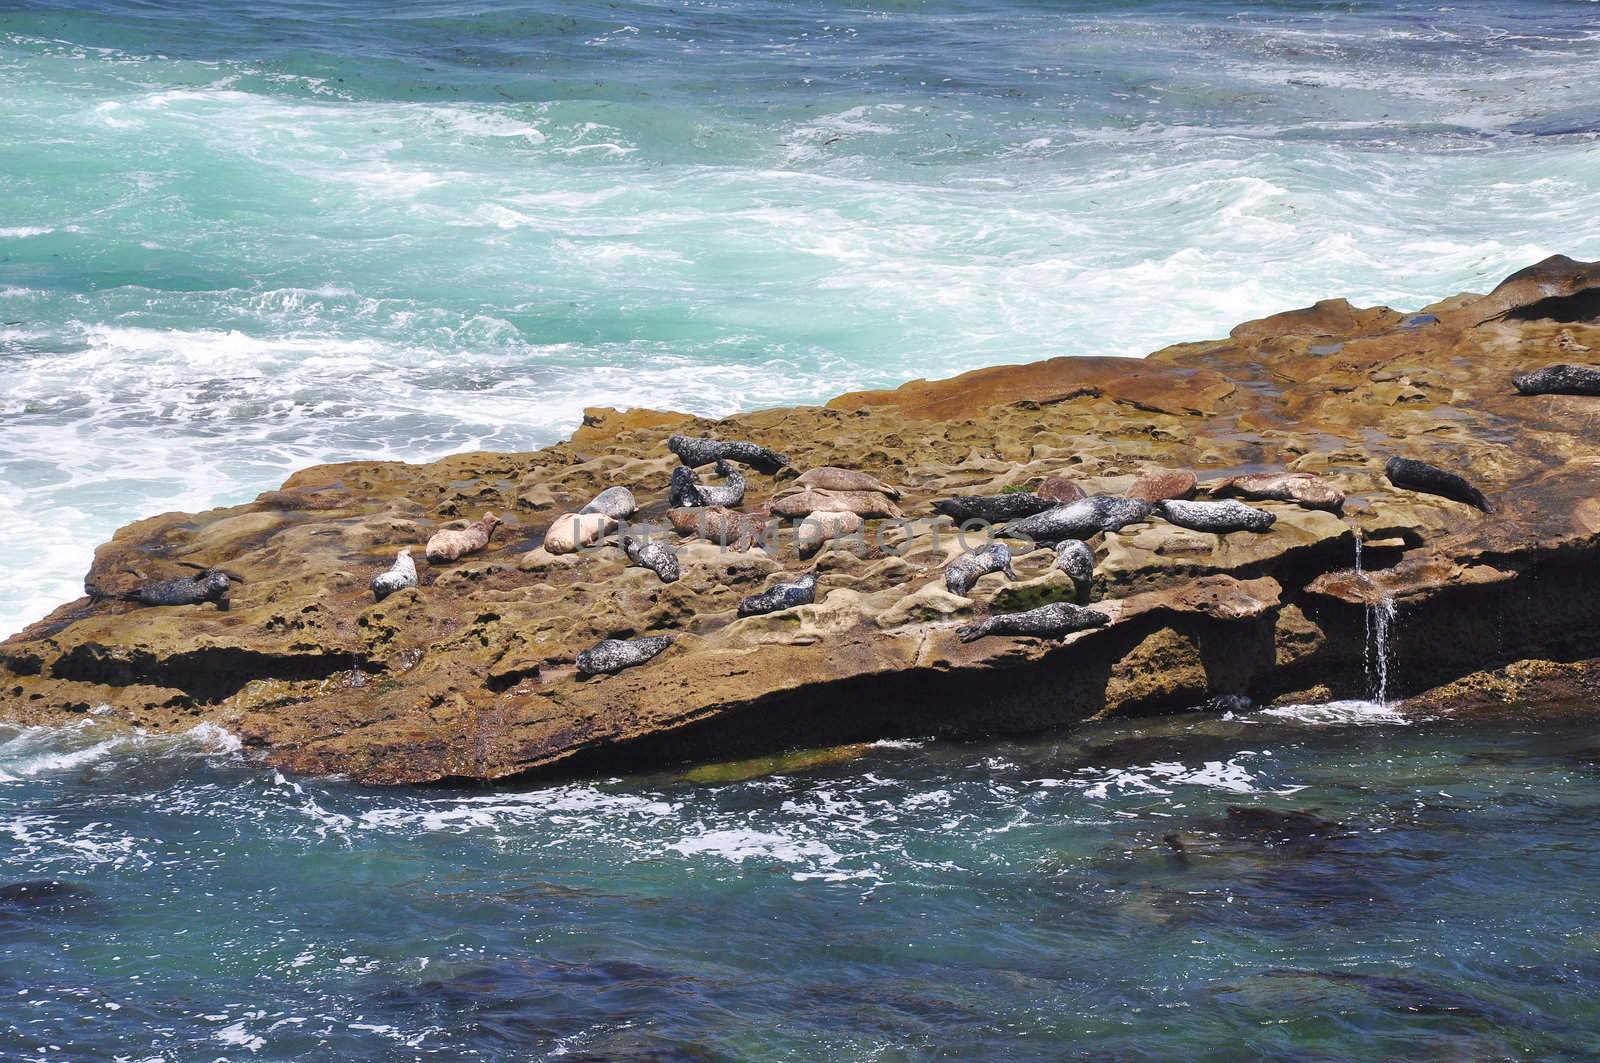 A large group of seals sun themselves on a rocky ledge near San Diego, California.